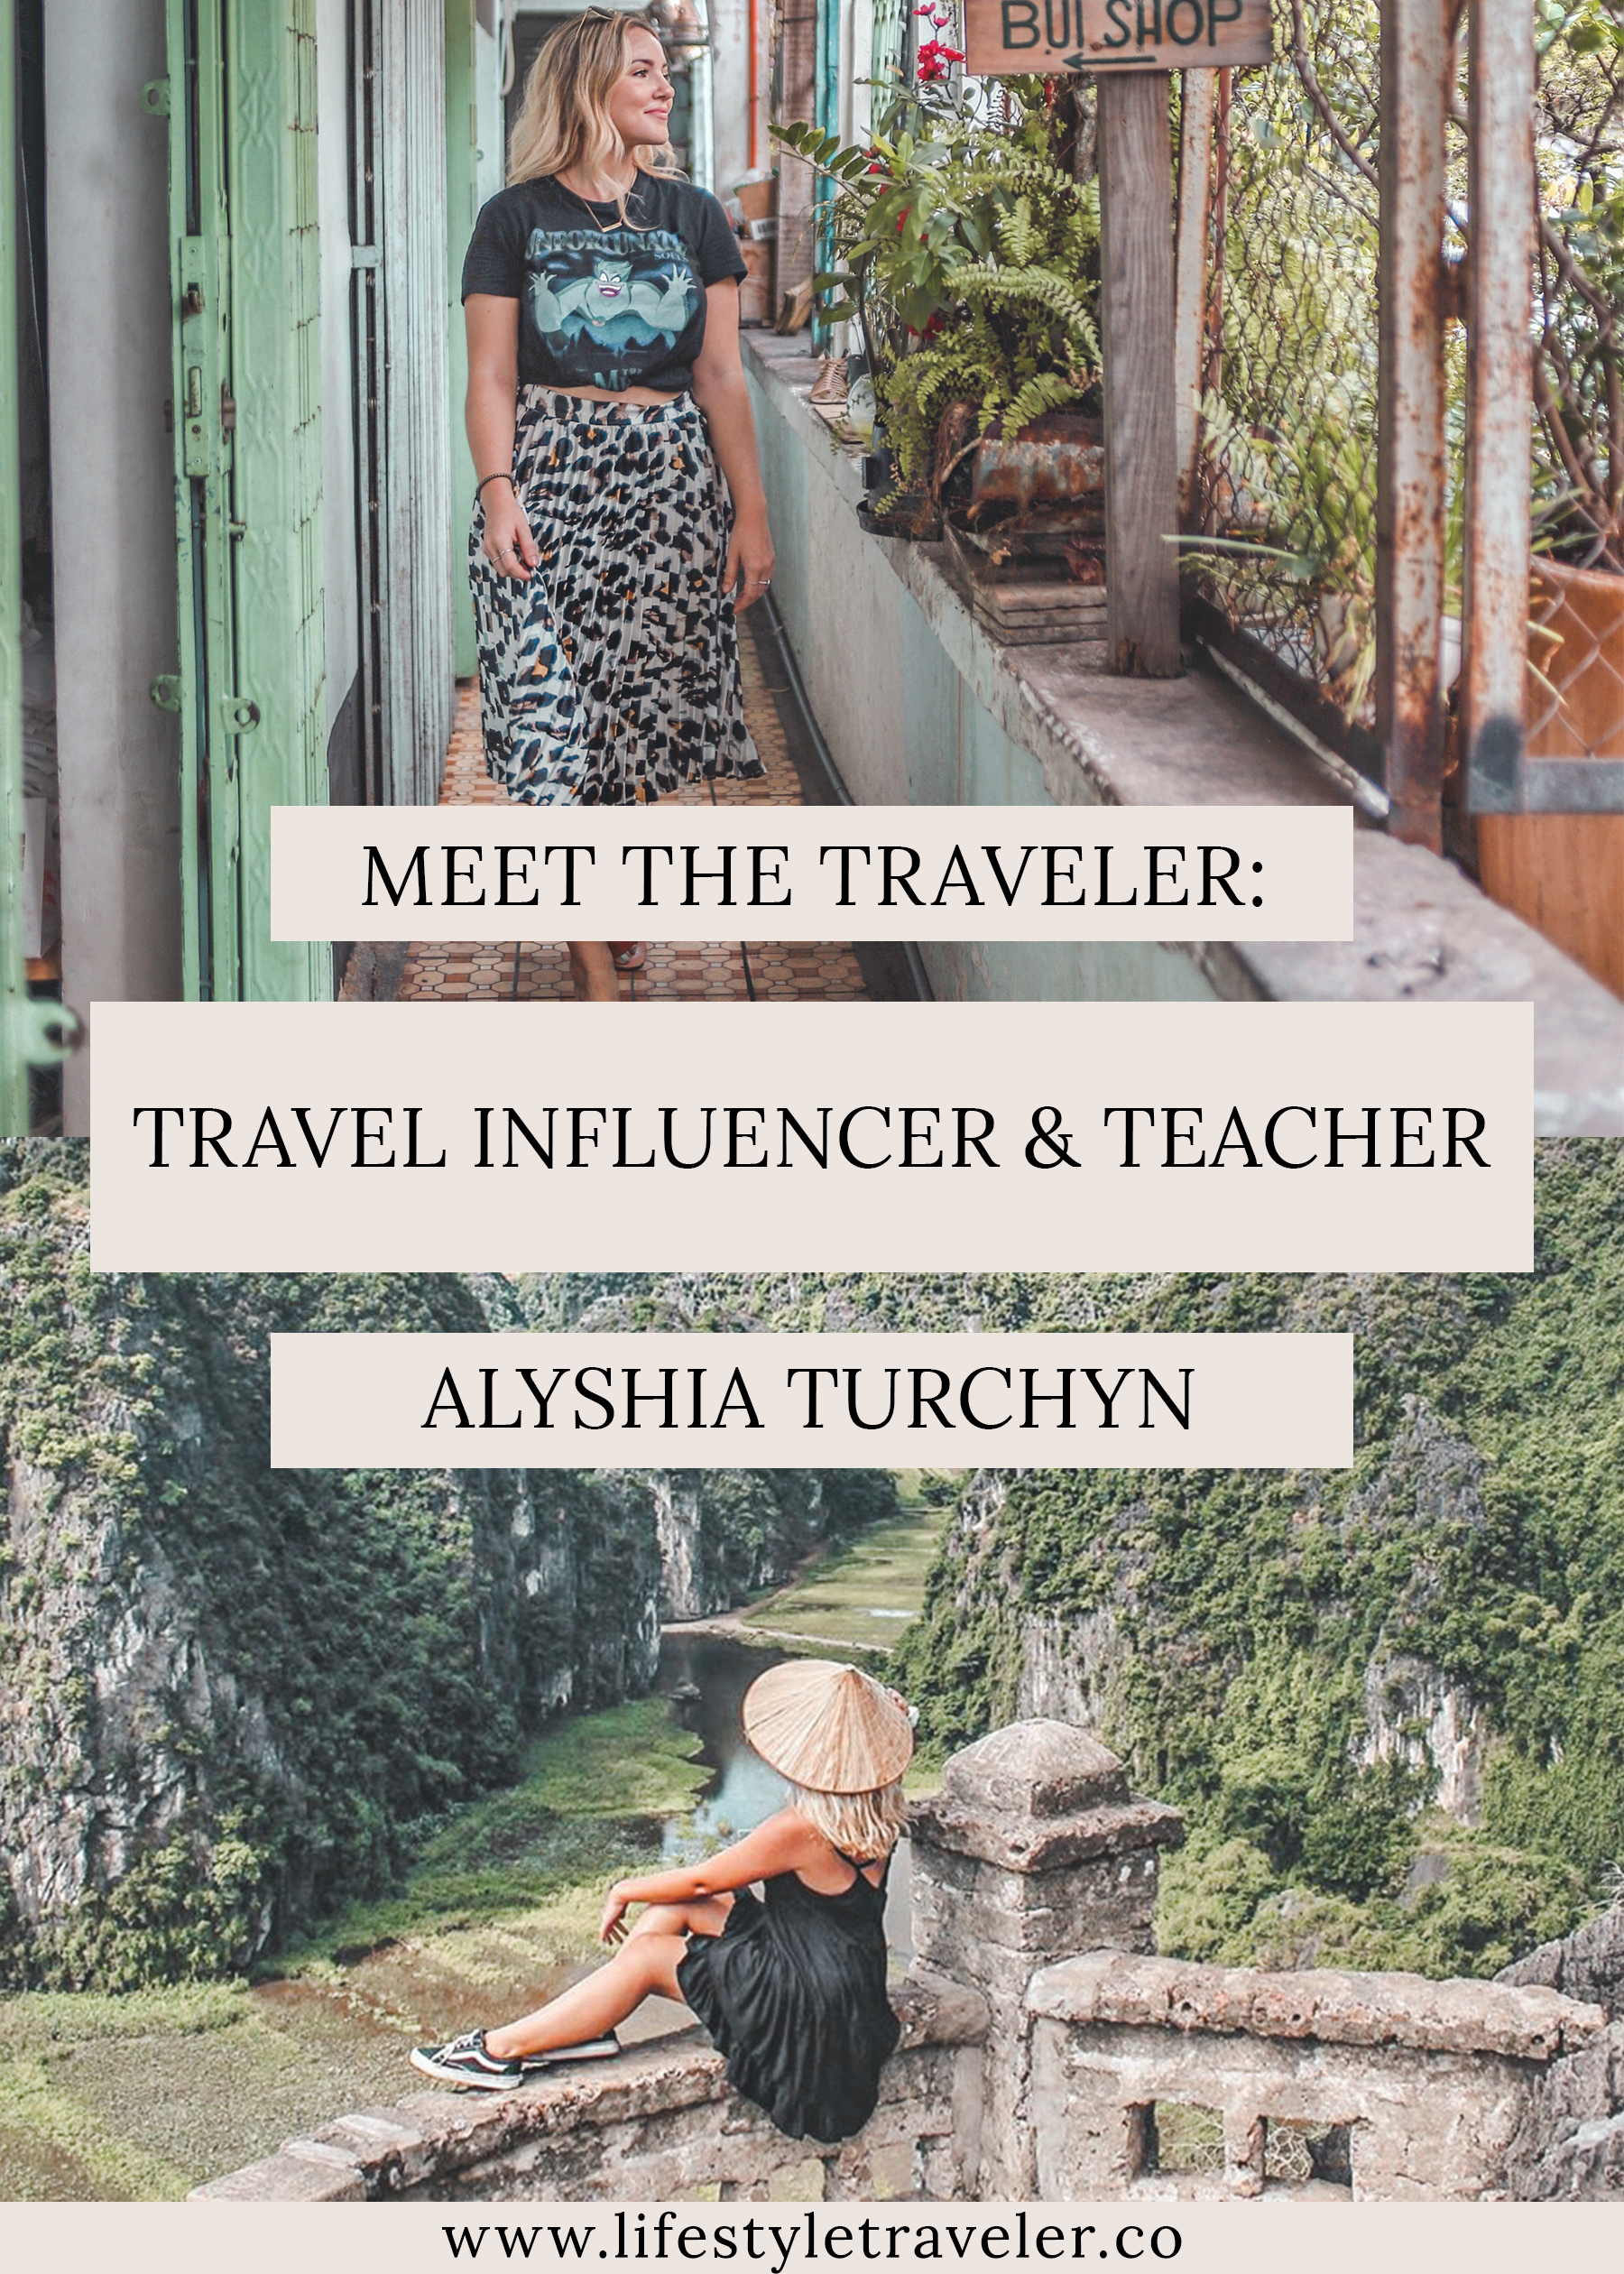 Meet The Traveler: Travel Influencer & Teacher Alyshia Turchyn | lifestyletraveler.co | IG: @lifestyletraveler.co | Photo by: Alyshia Turchyn